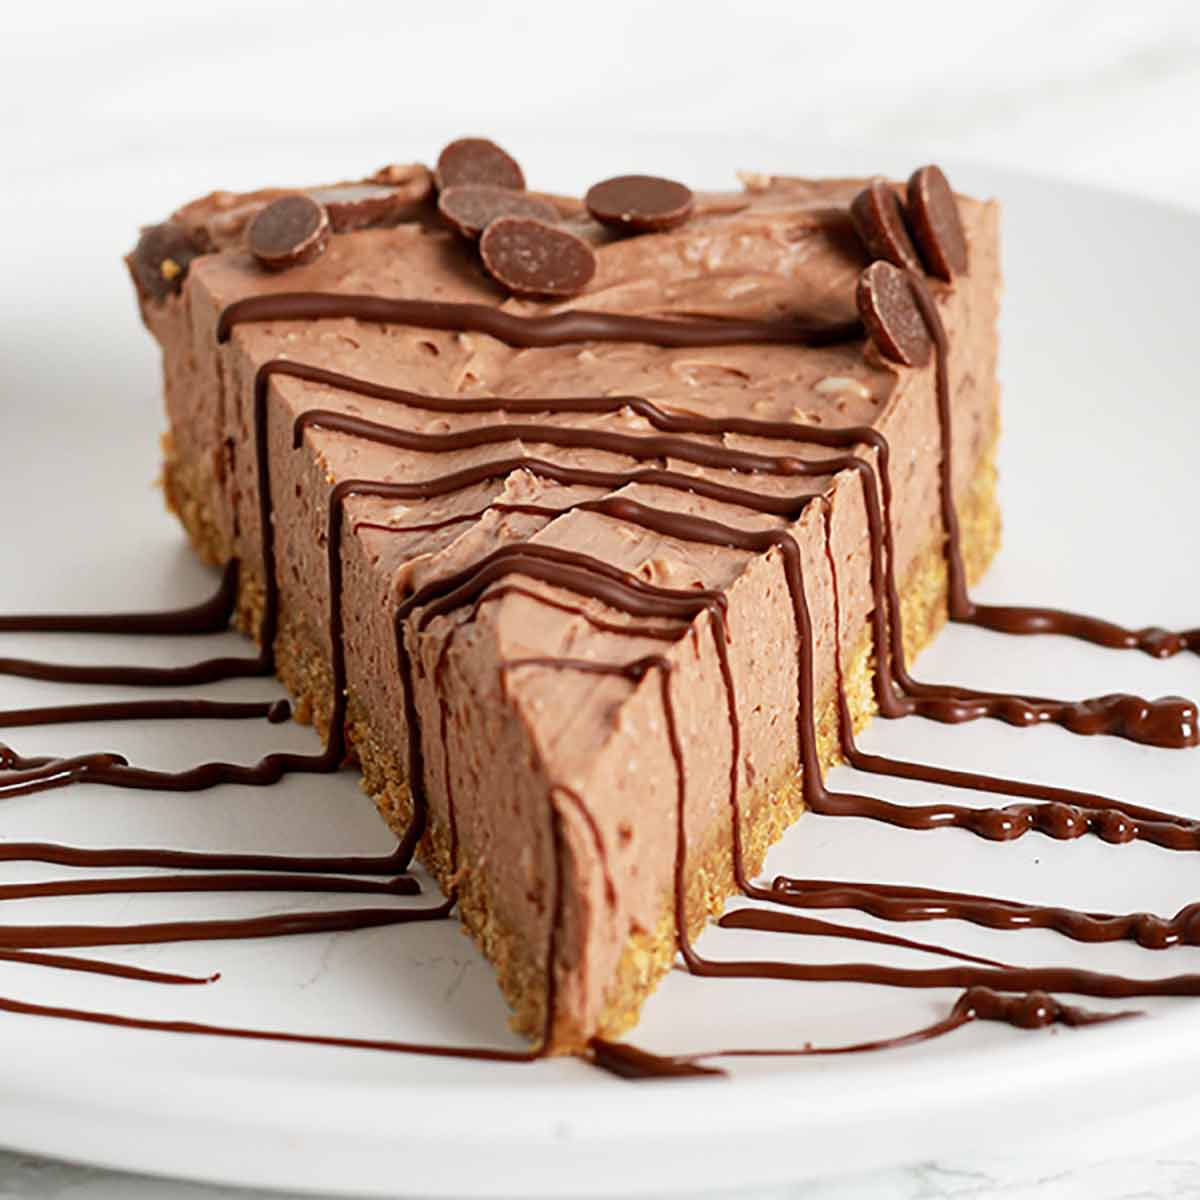 Slice Of Vegan Chocolate Cheesecake On A Plate